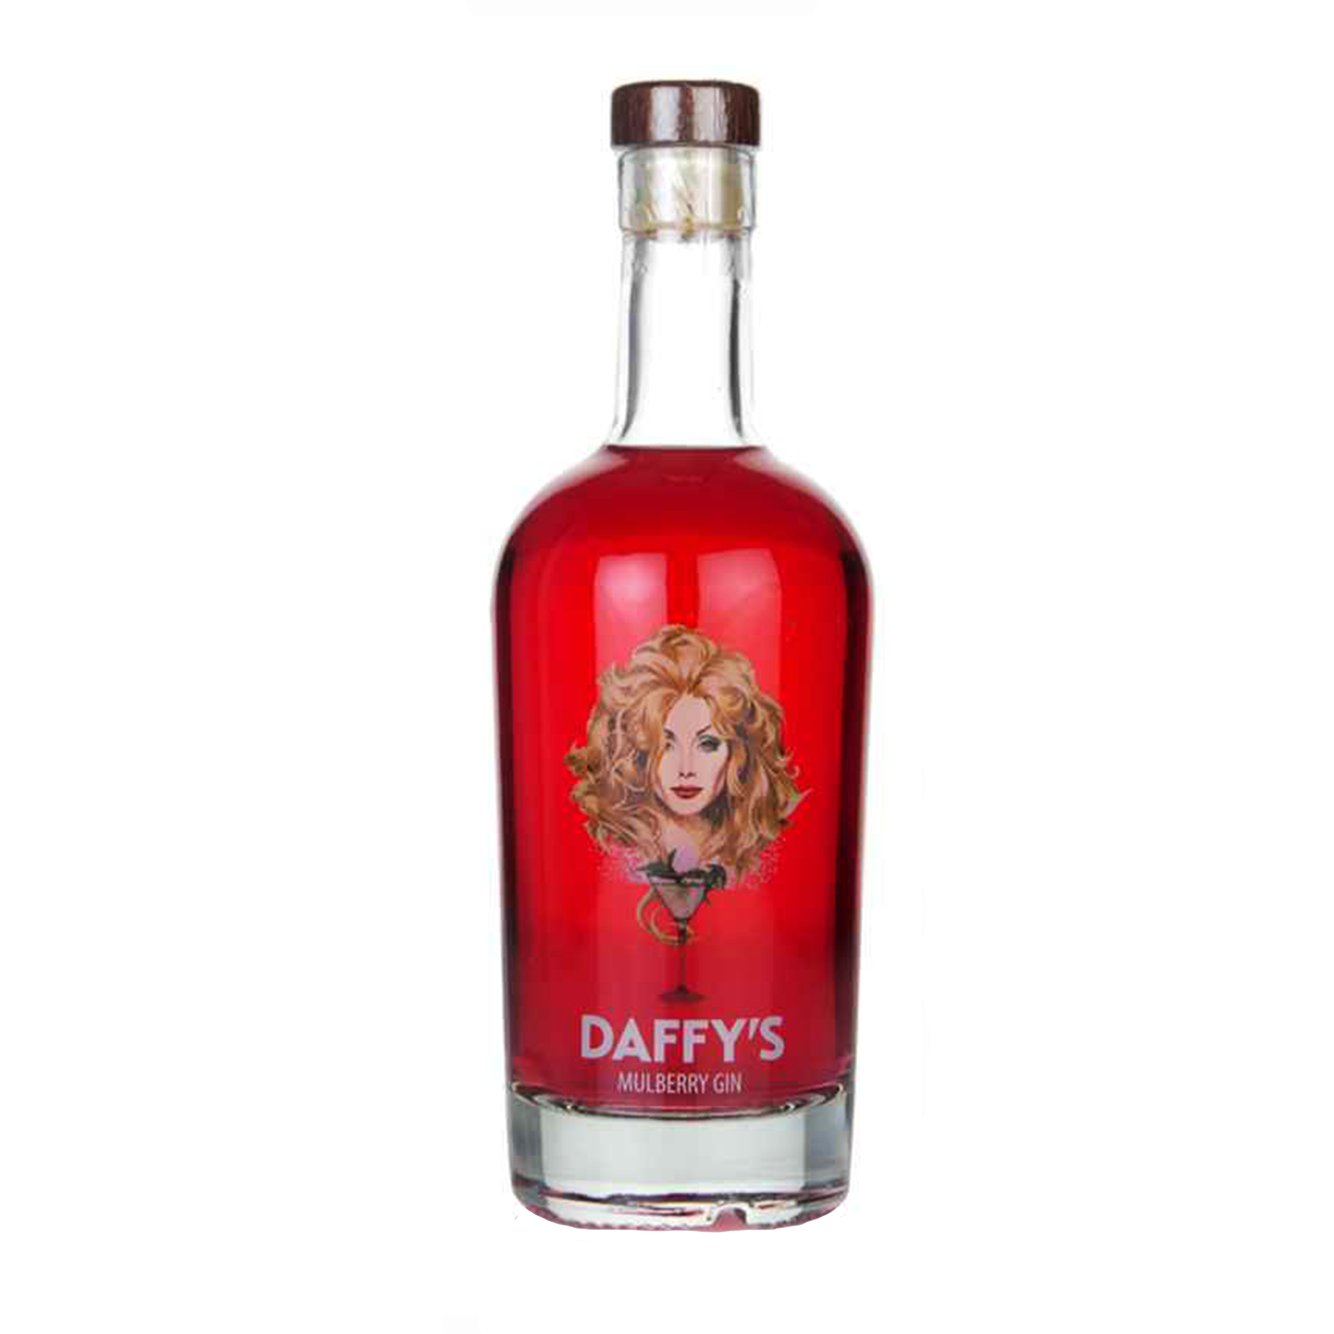 Daffy's Mulberry Gin